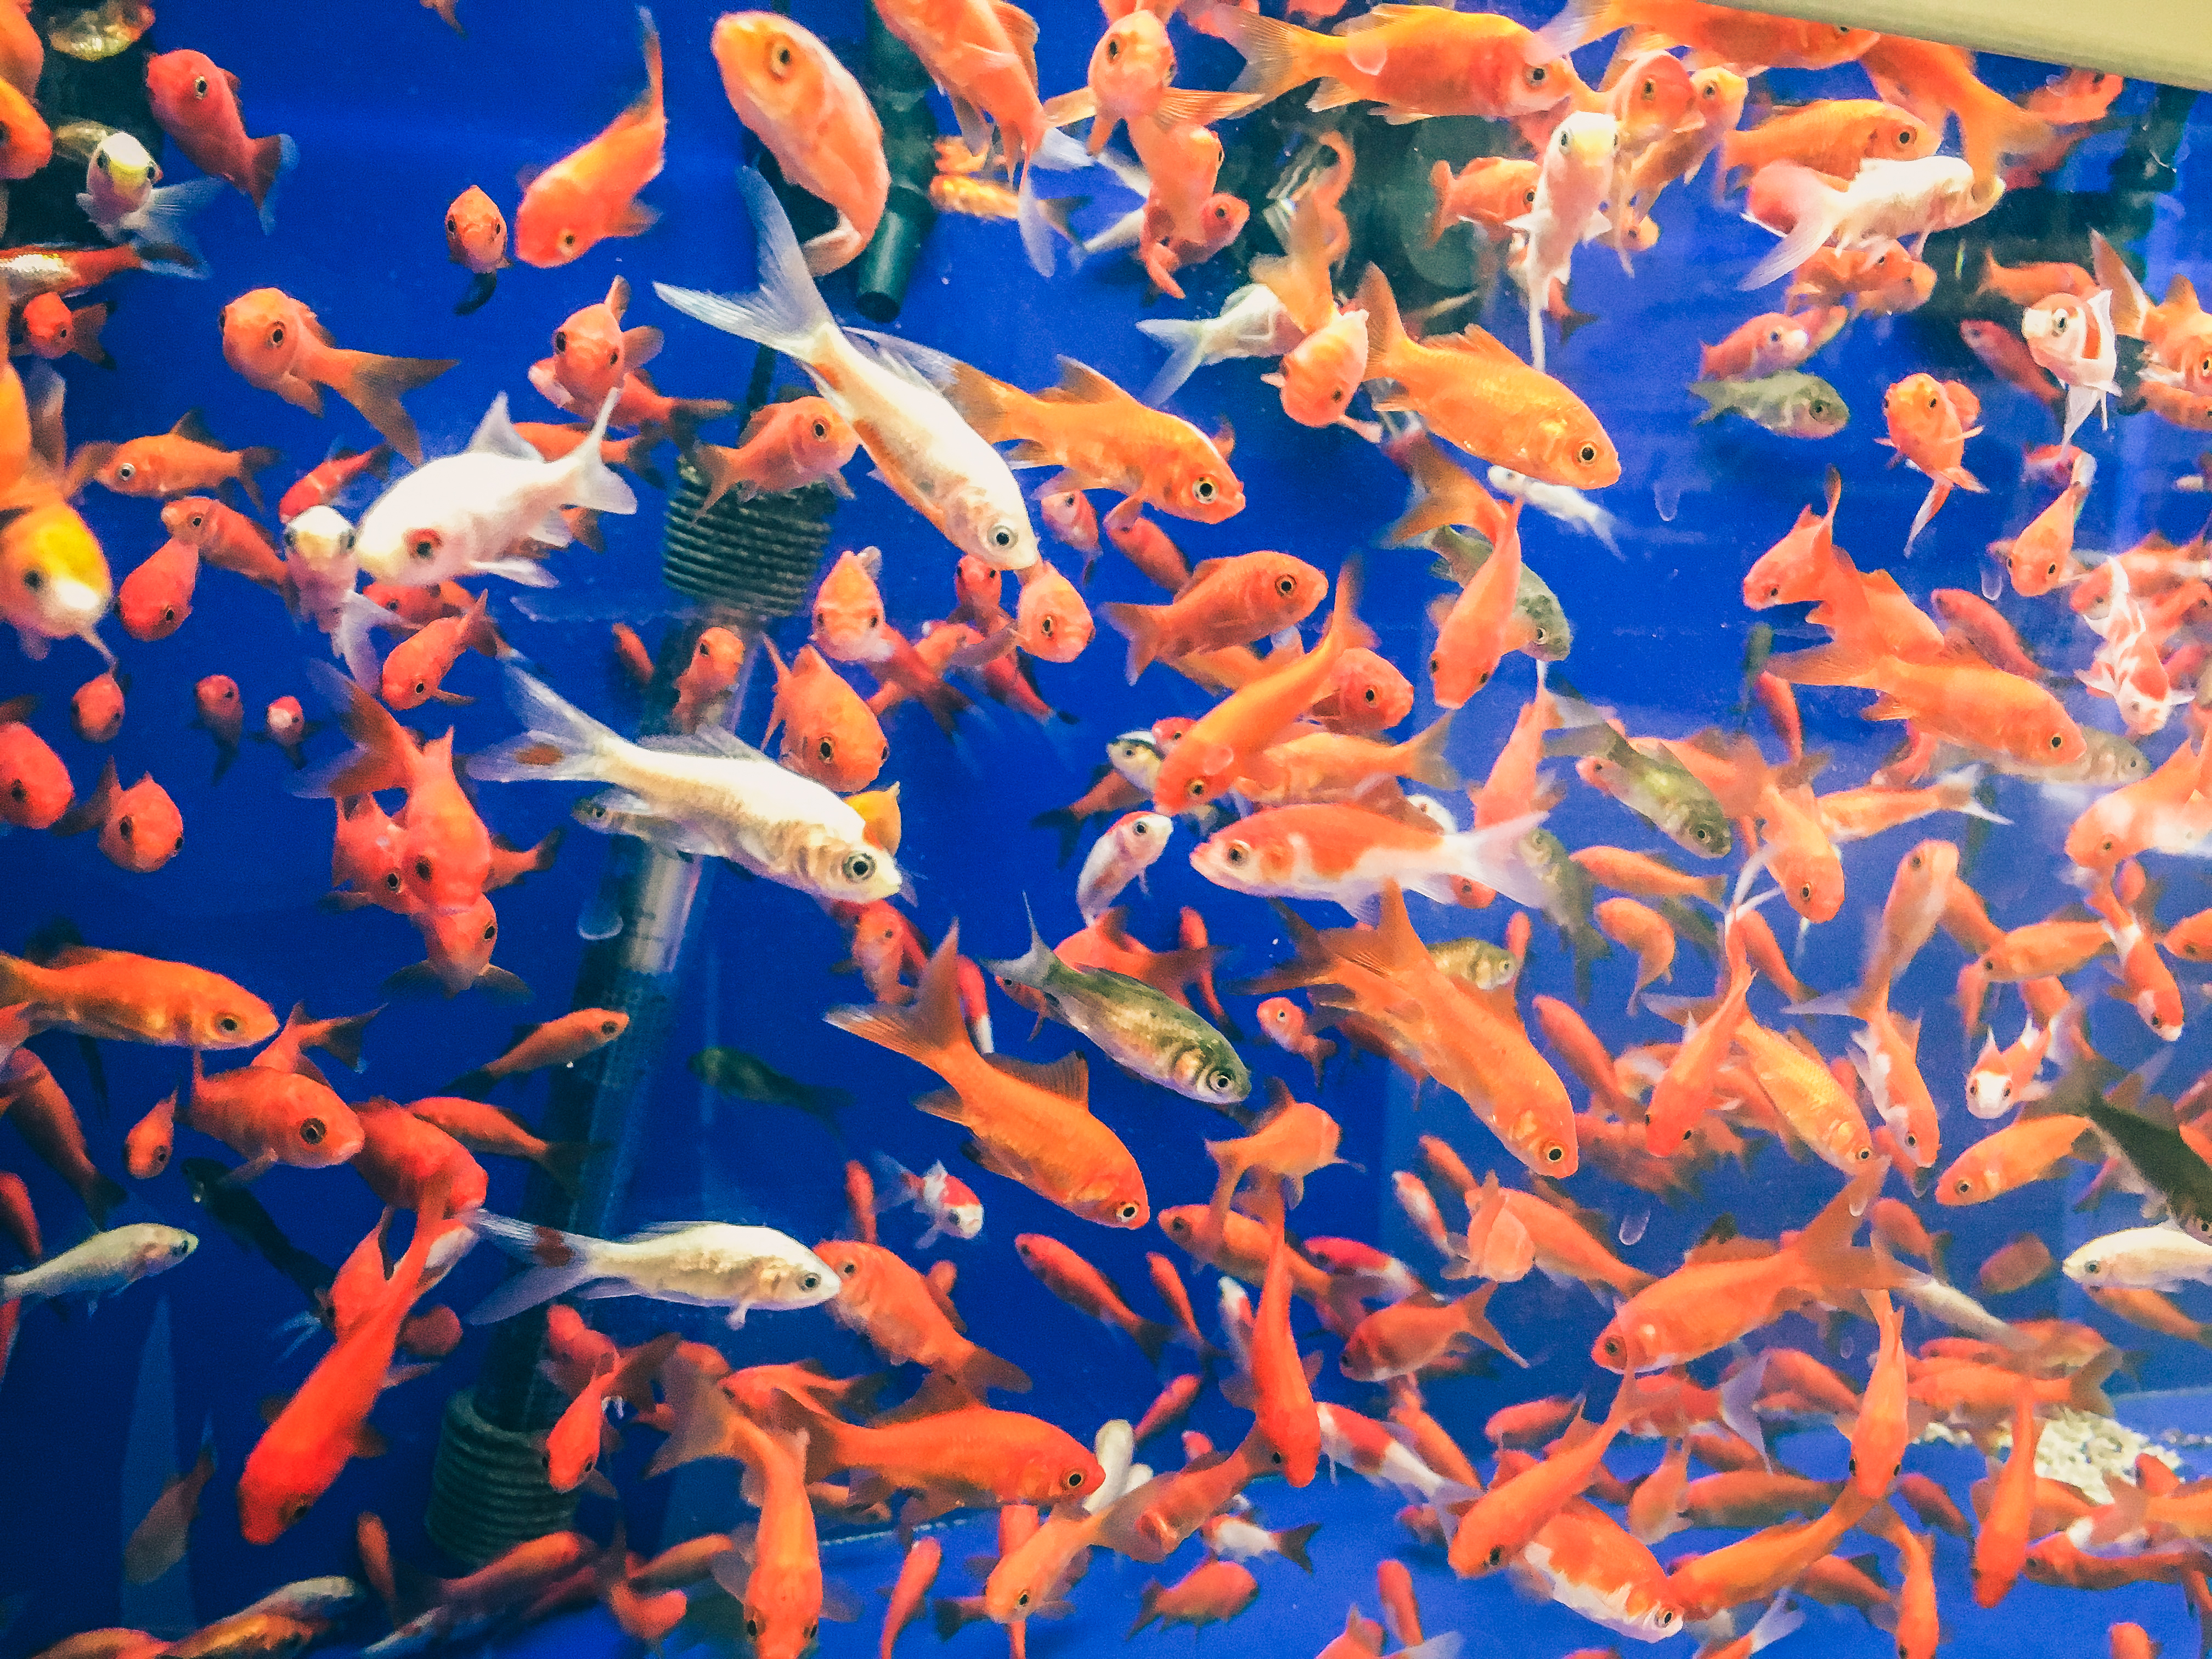 File:Crowded Fish Tank at PetSmart pet store, St. Louis Park, MN  (24148280830).jpg - Wikimedia Commons